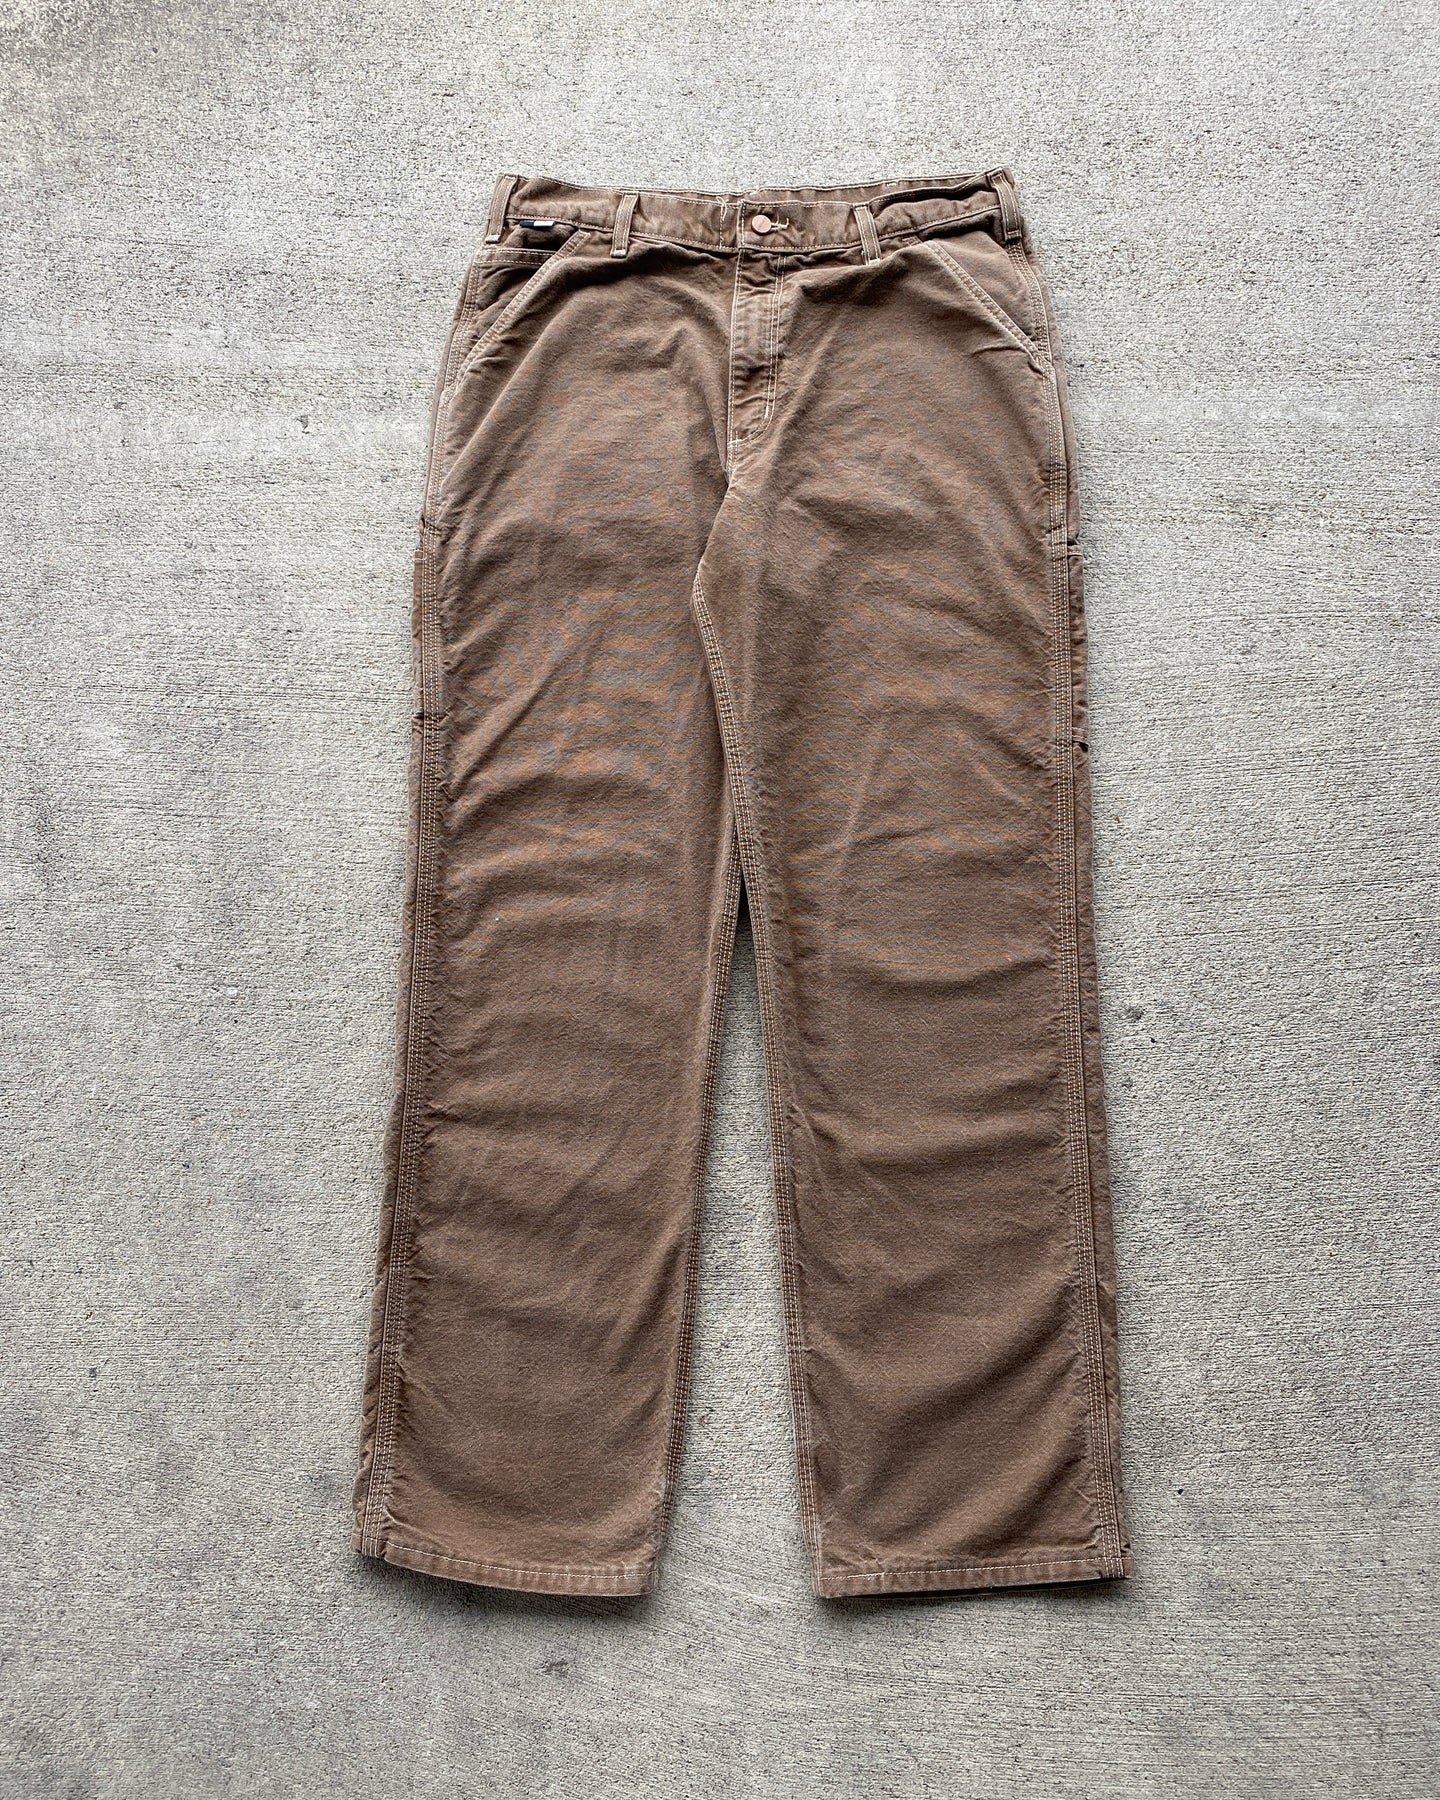 Carhartt Coffee Carpenter Pants - Size 34 x 32